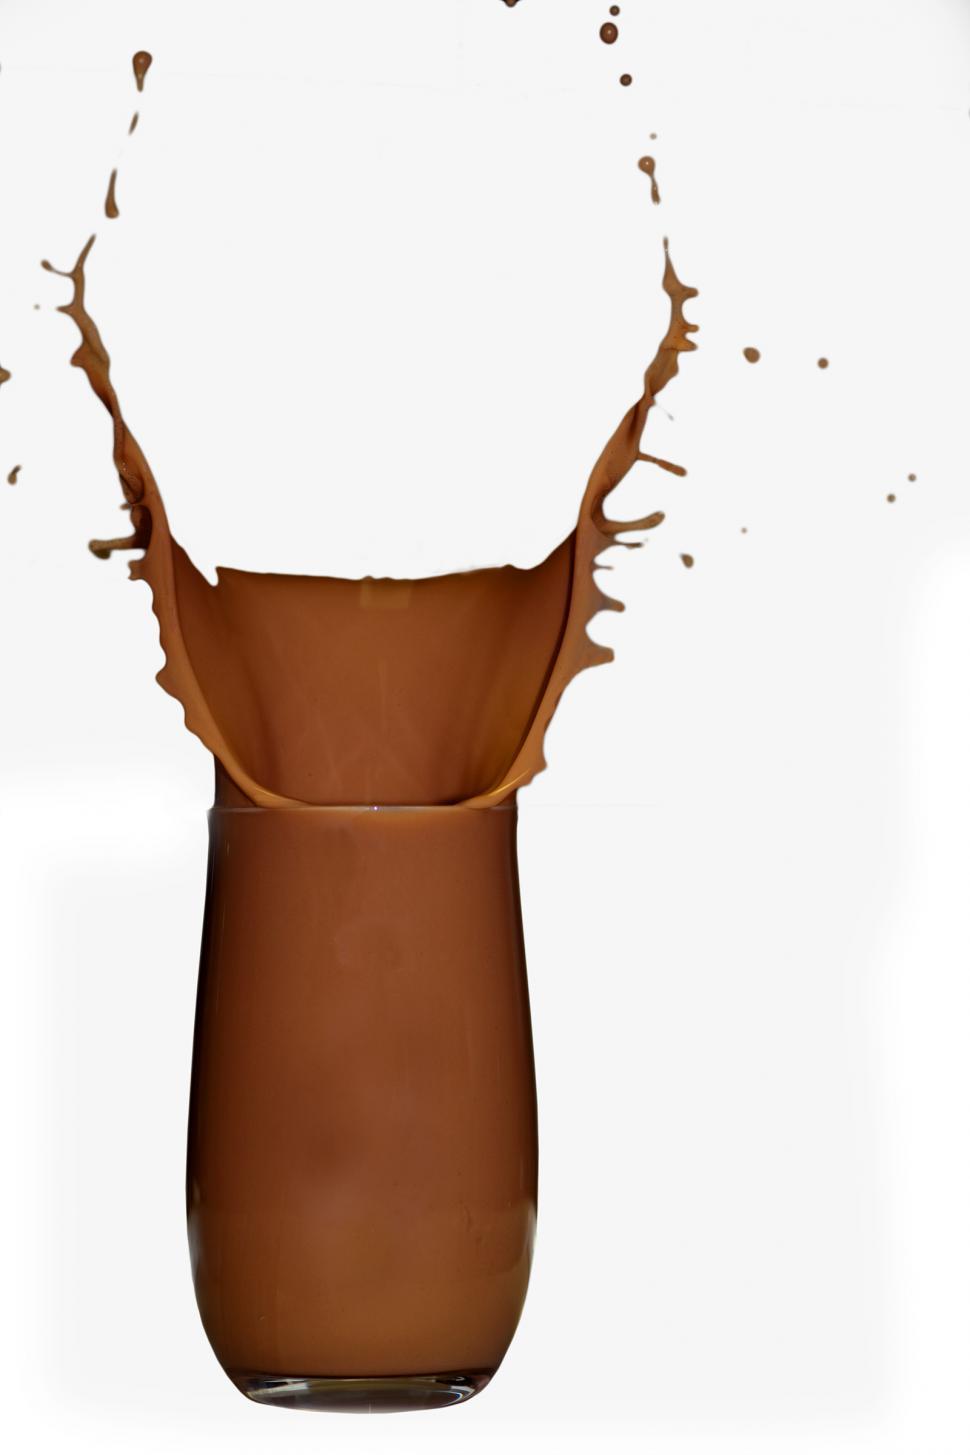 Free Image of Chocolate Milk 